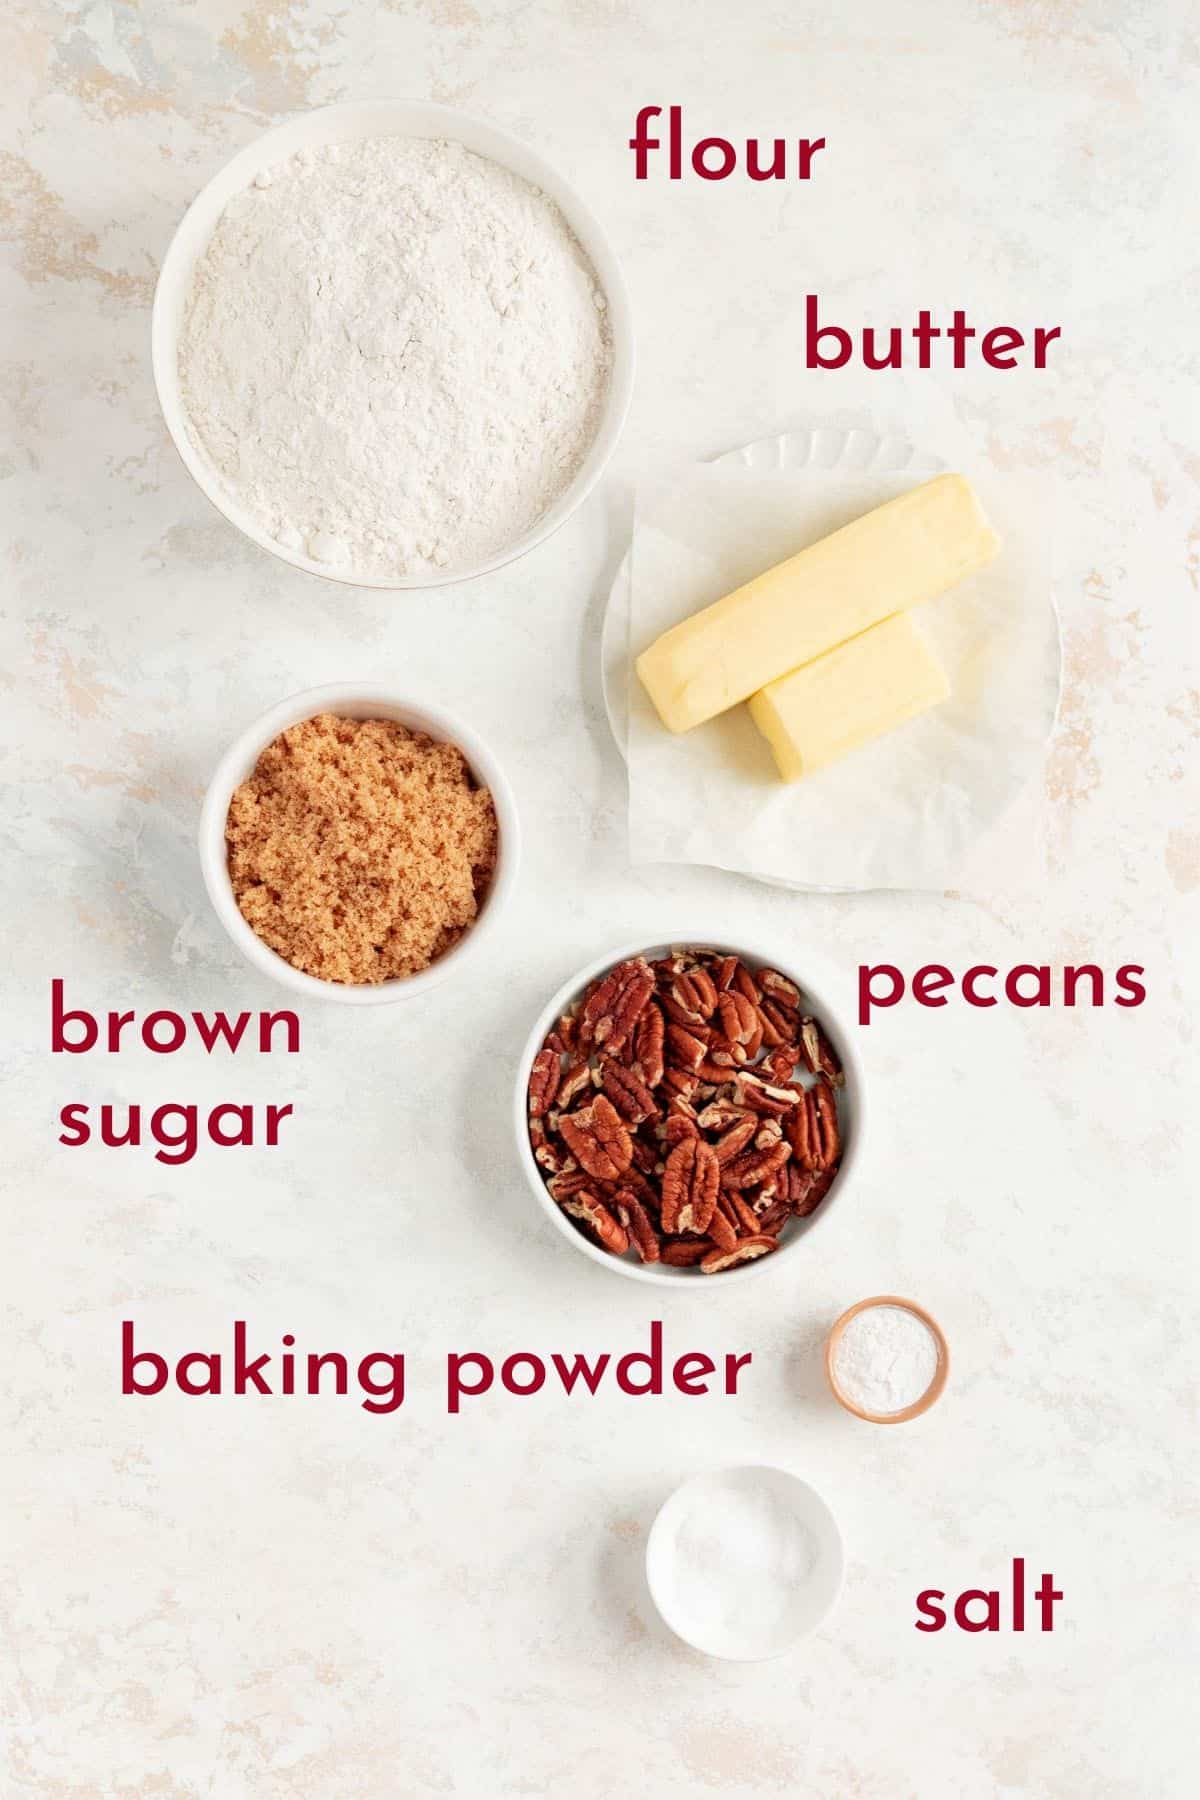 flour, butter, brown sugar, pecans, baking powder, and salt in individual bowls.